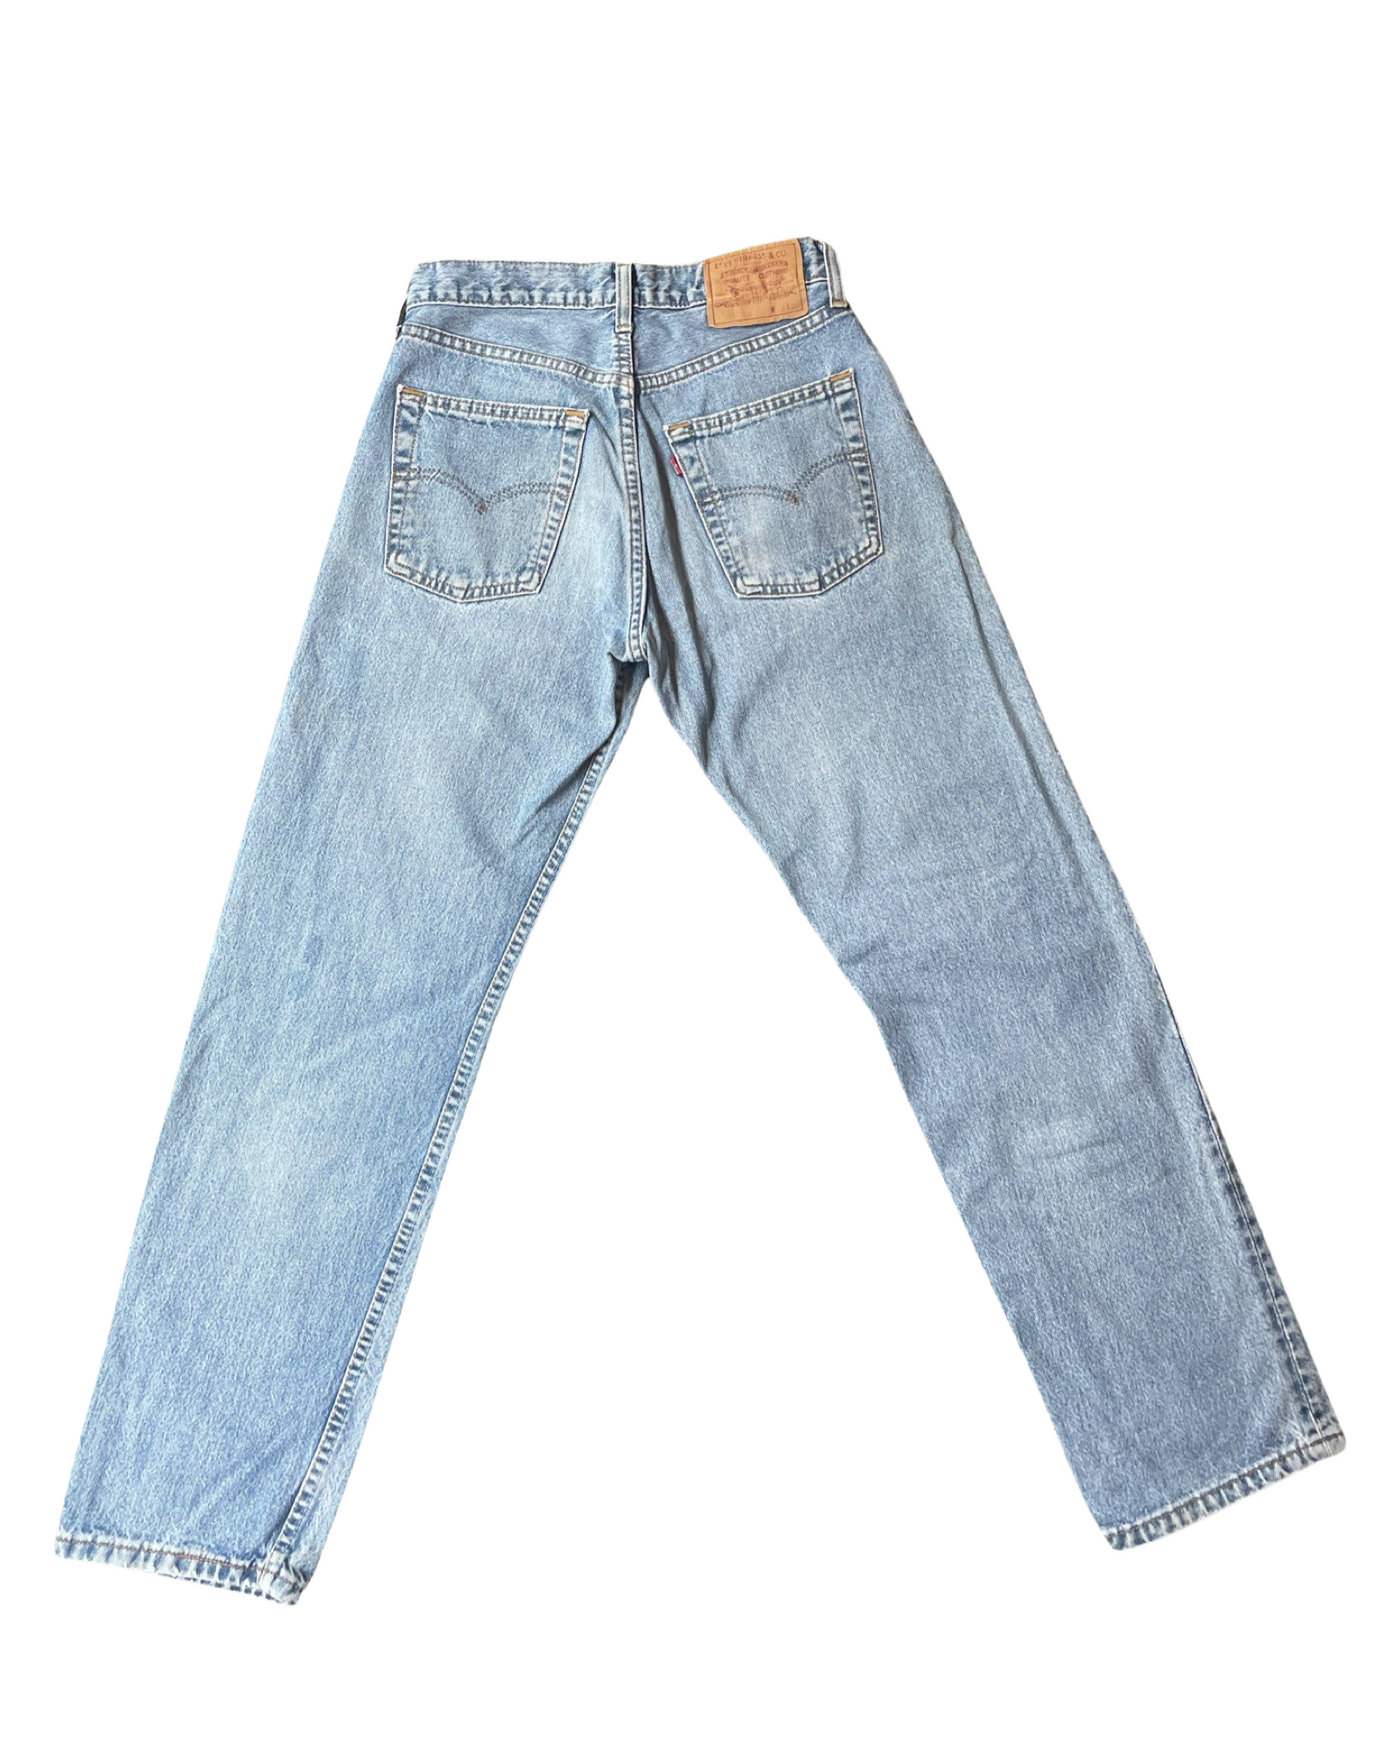 Vintage Levi 501 Jean